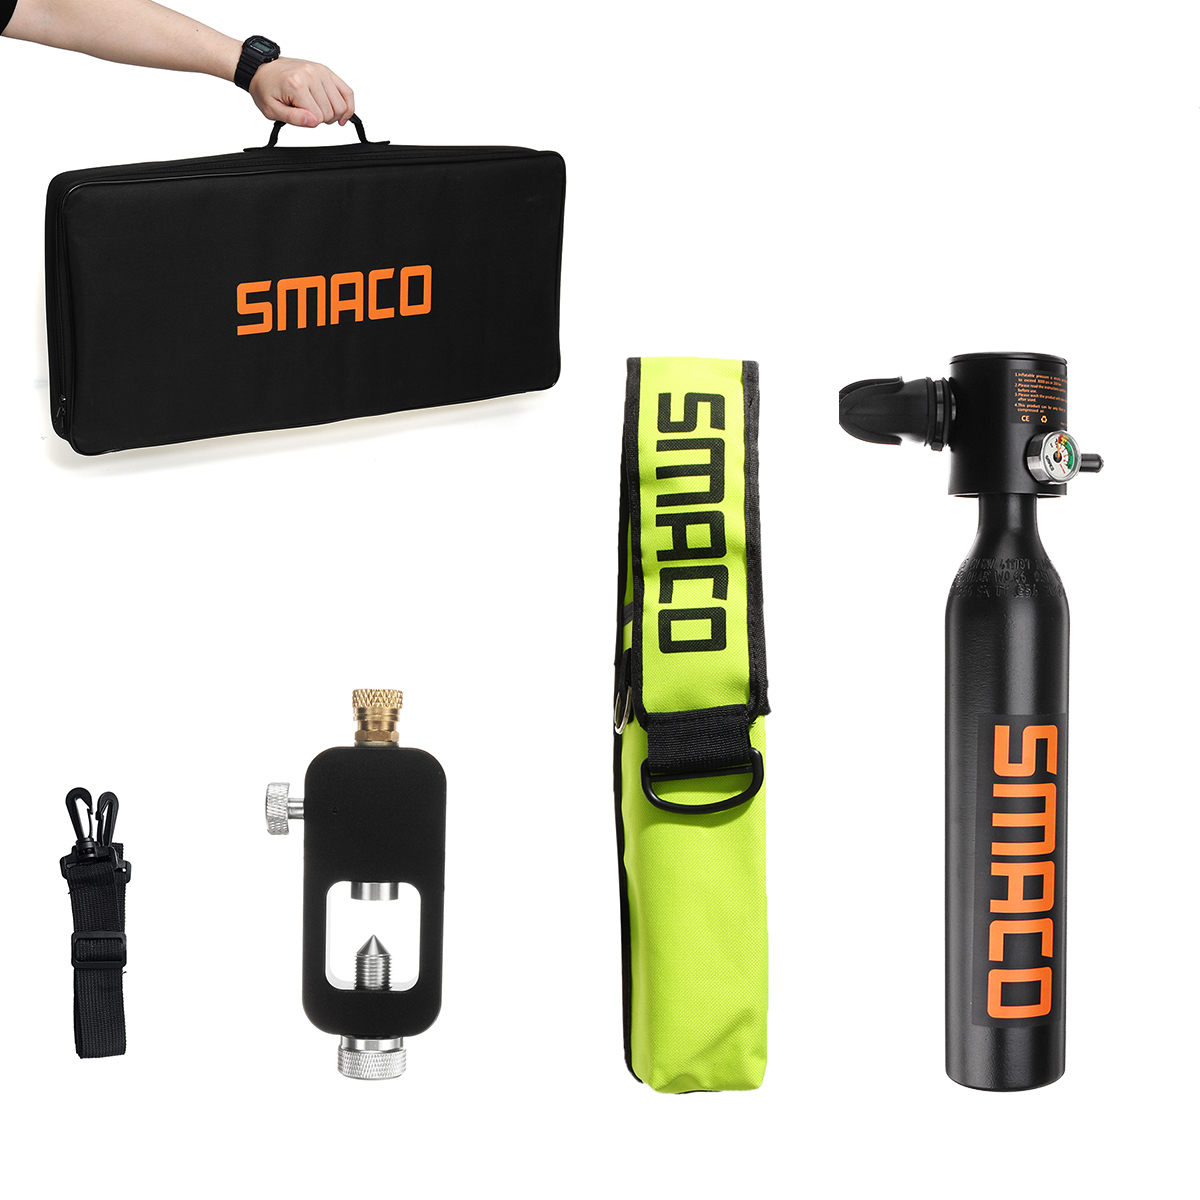 

SMACO 0.5L Oxygen Cylinder Mini Scuba Diving Air Tank Kit